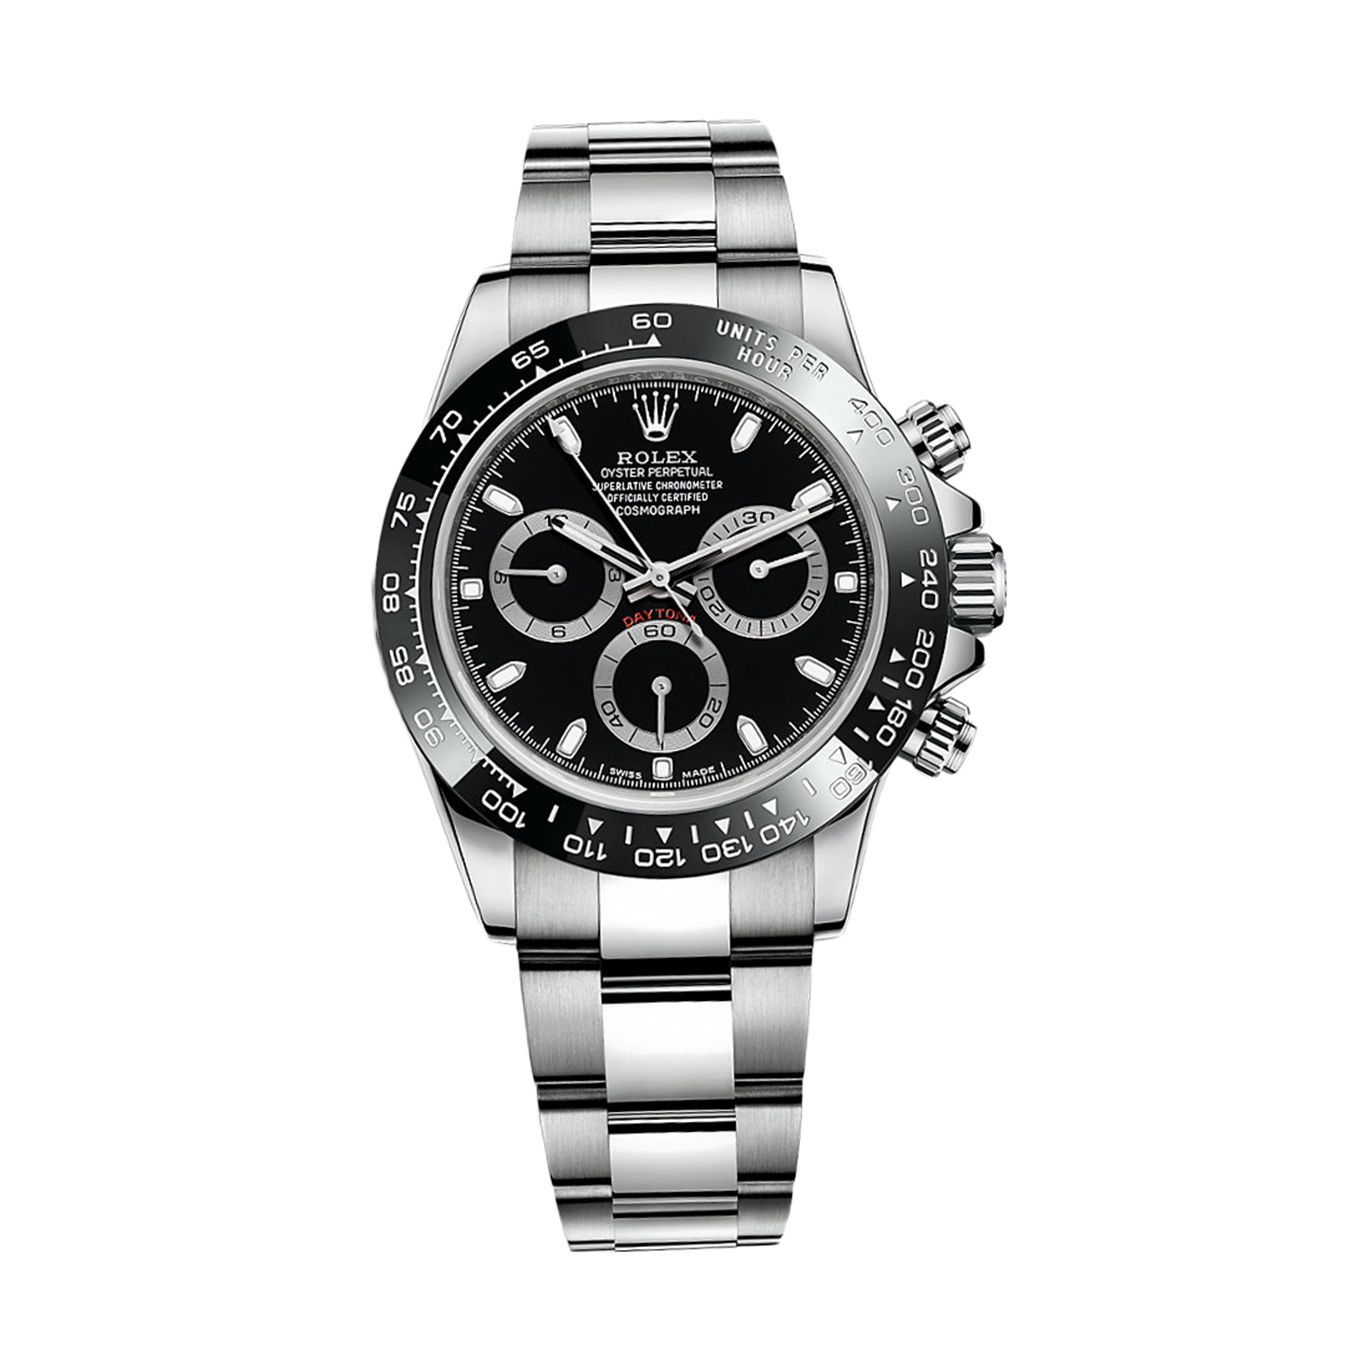 Cosmograph Daytona 116500LN Stainless Steel Watch (Black)